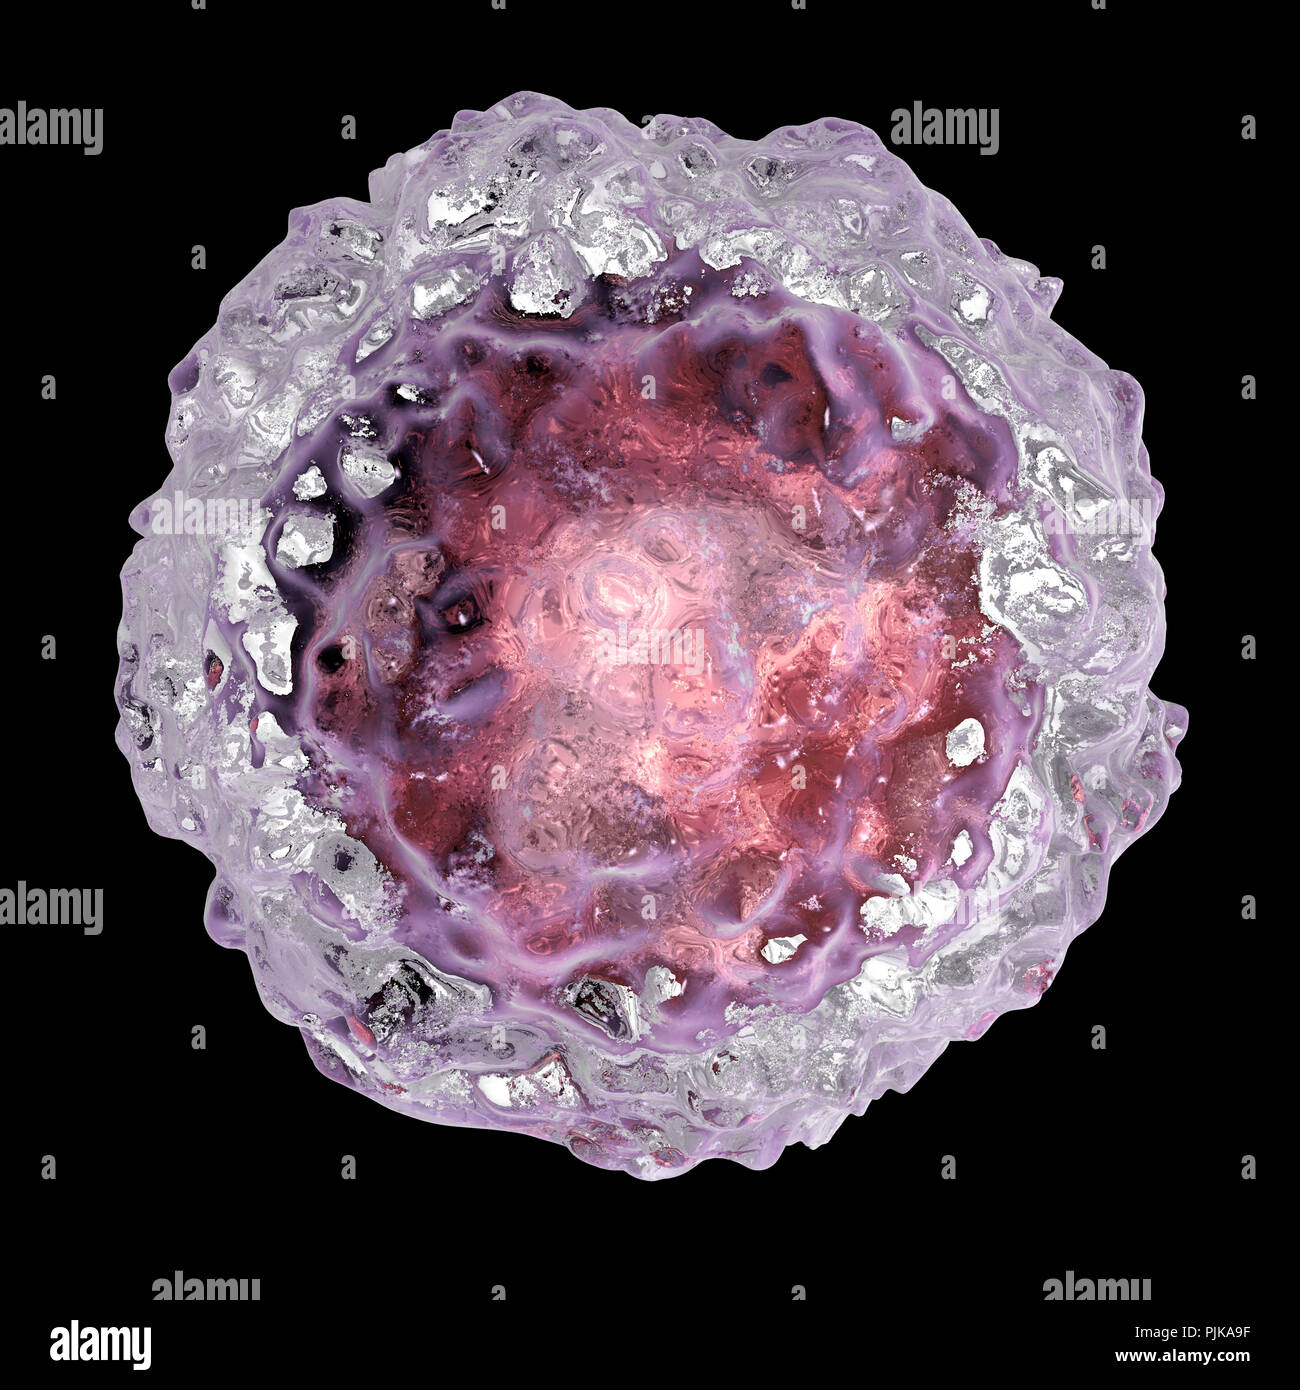 Human embryonic stem cells, computer illustration. Stock Photo